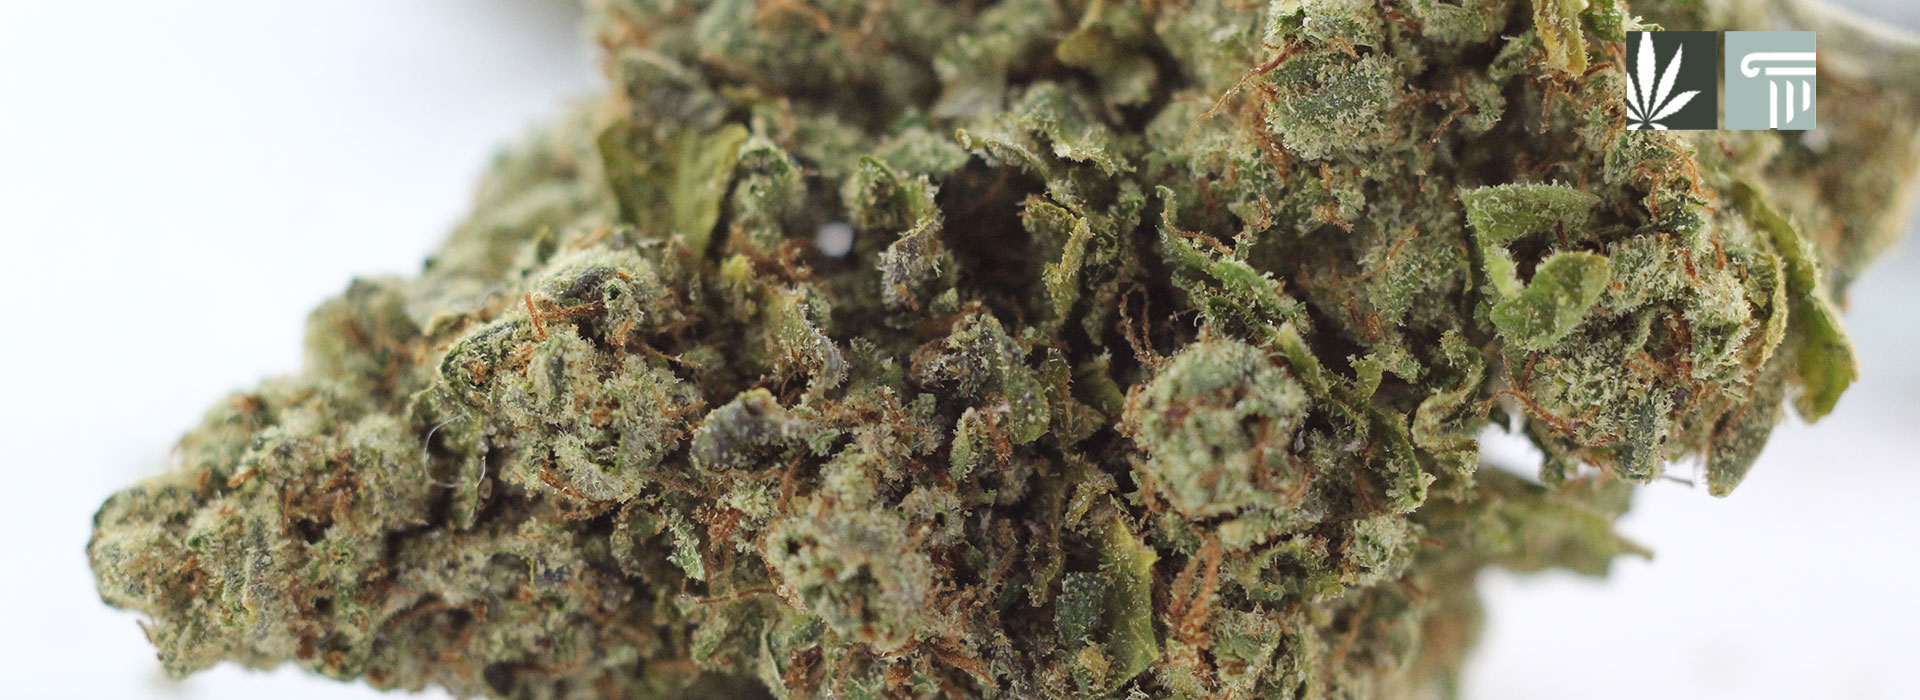 Montana legalizes marijuana